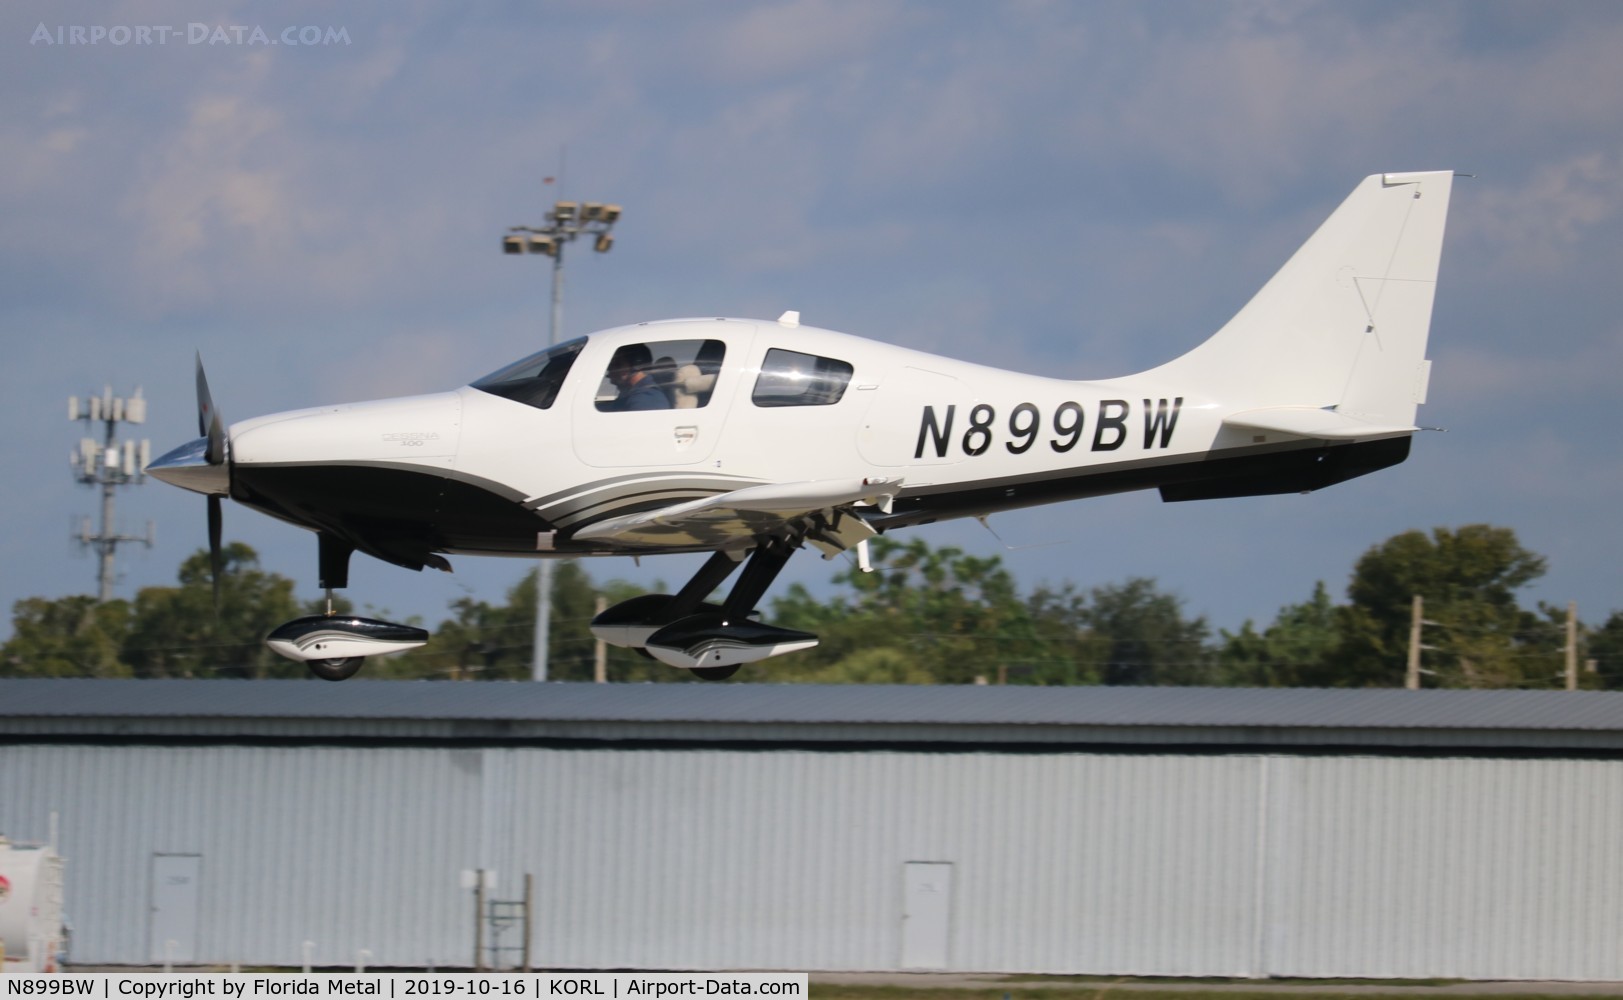 N899BW, 2006 Columbia Aircraft Mfg LC41-550FG C/N 41601, LC41-550FG